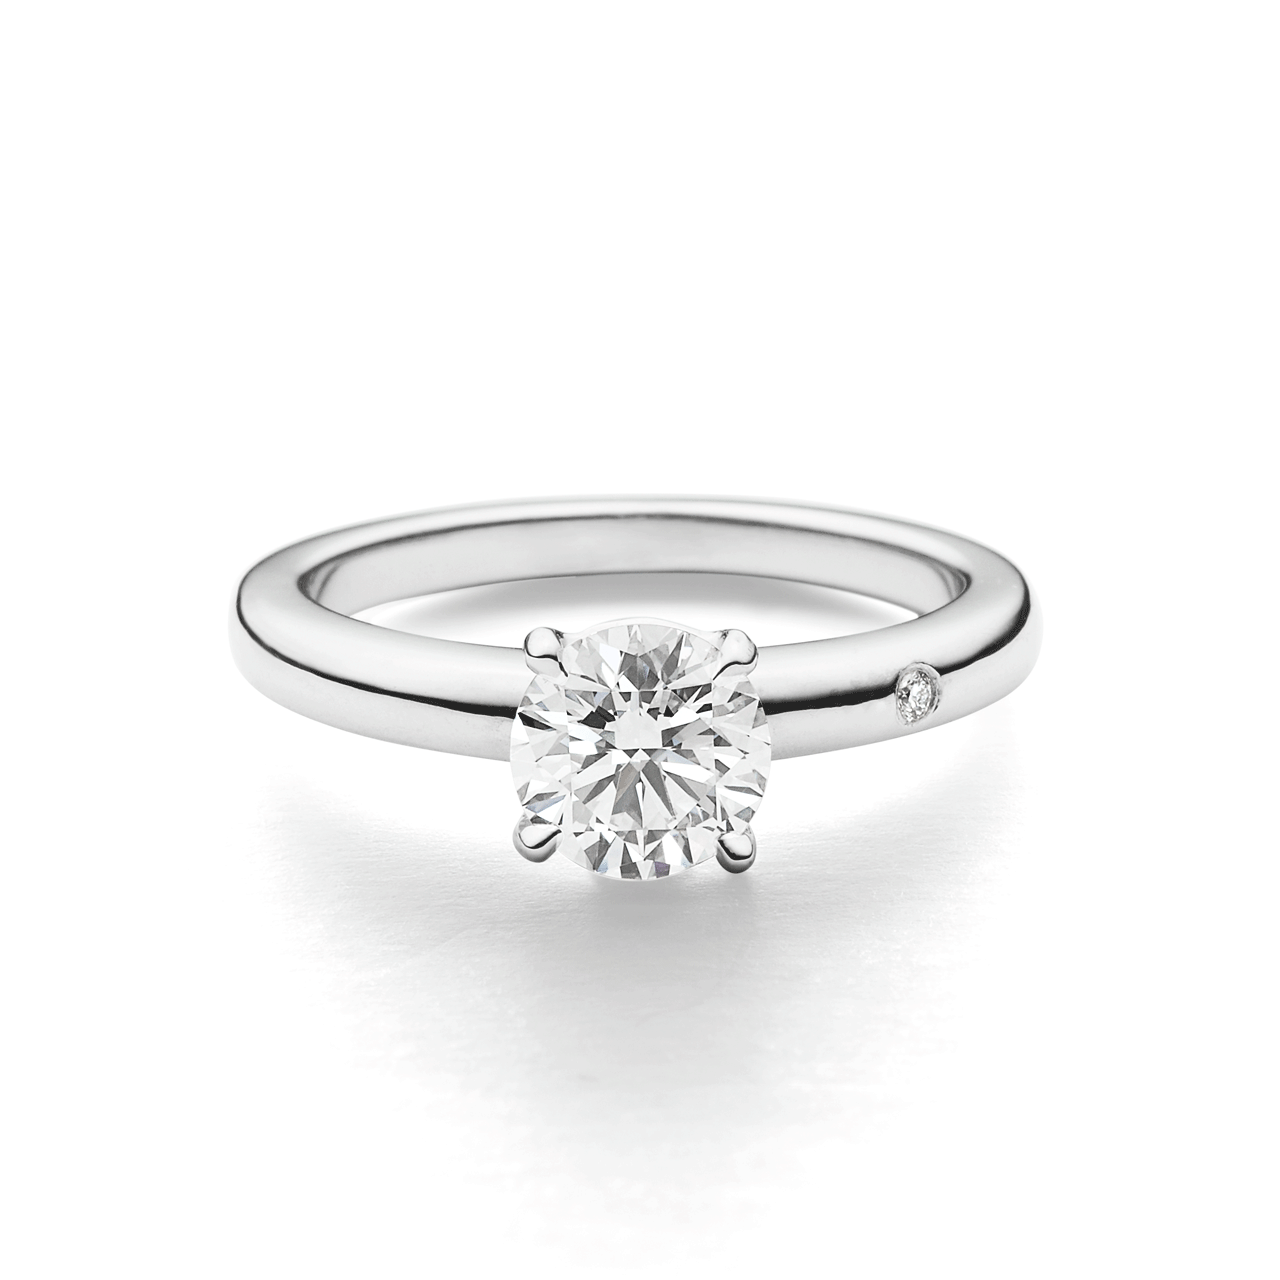 The Hamilton Solitaire Diamond Ring